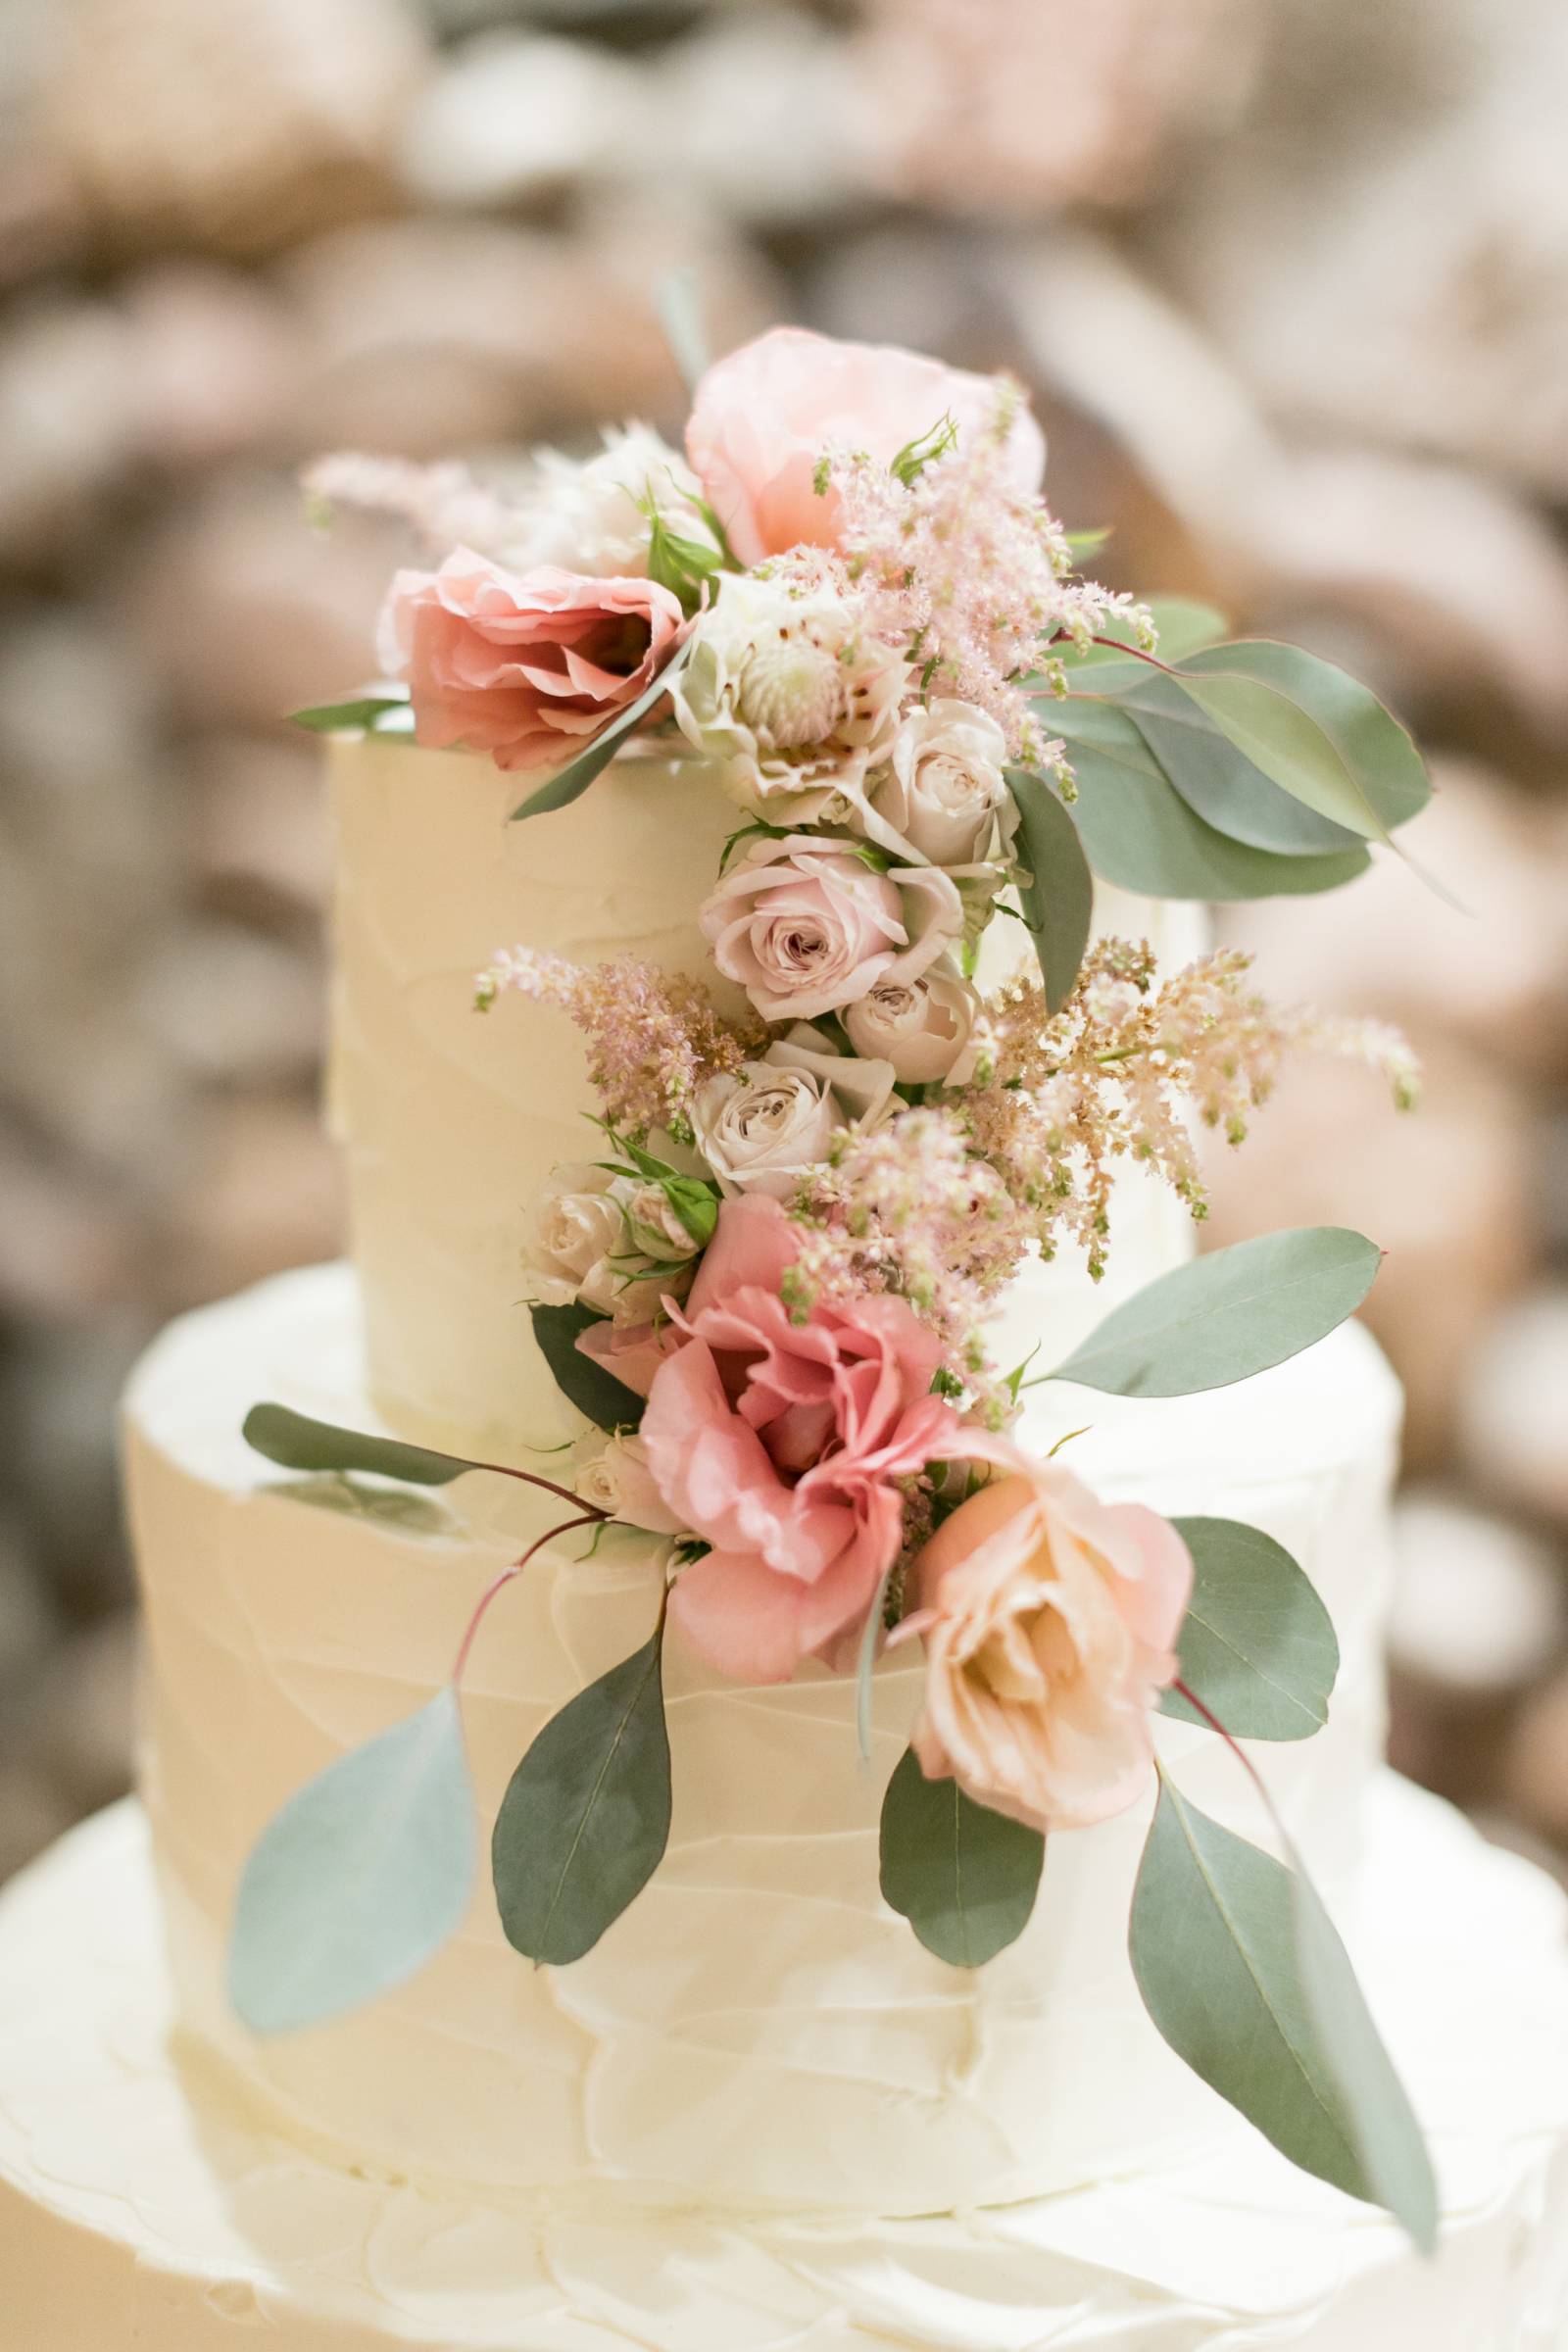 White Wedding Cake with Flowers